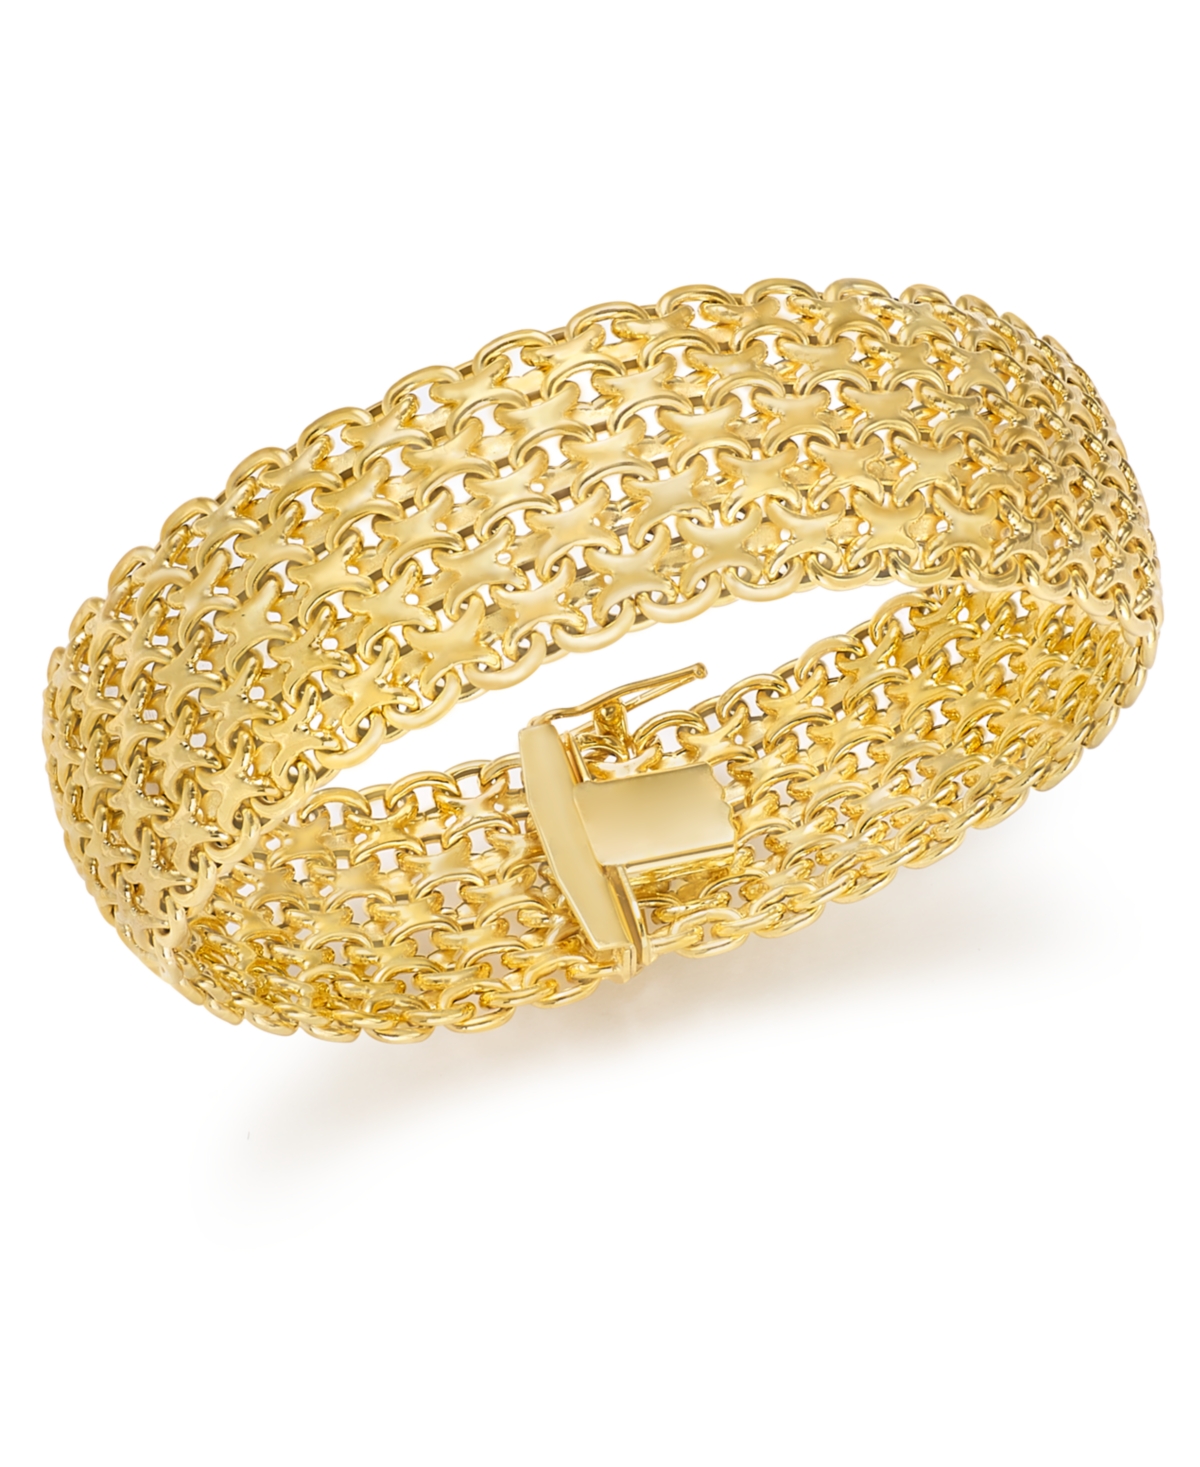 Wide Mesh Link & Chain Bracelet in 14k Gold - White Gold